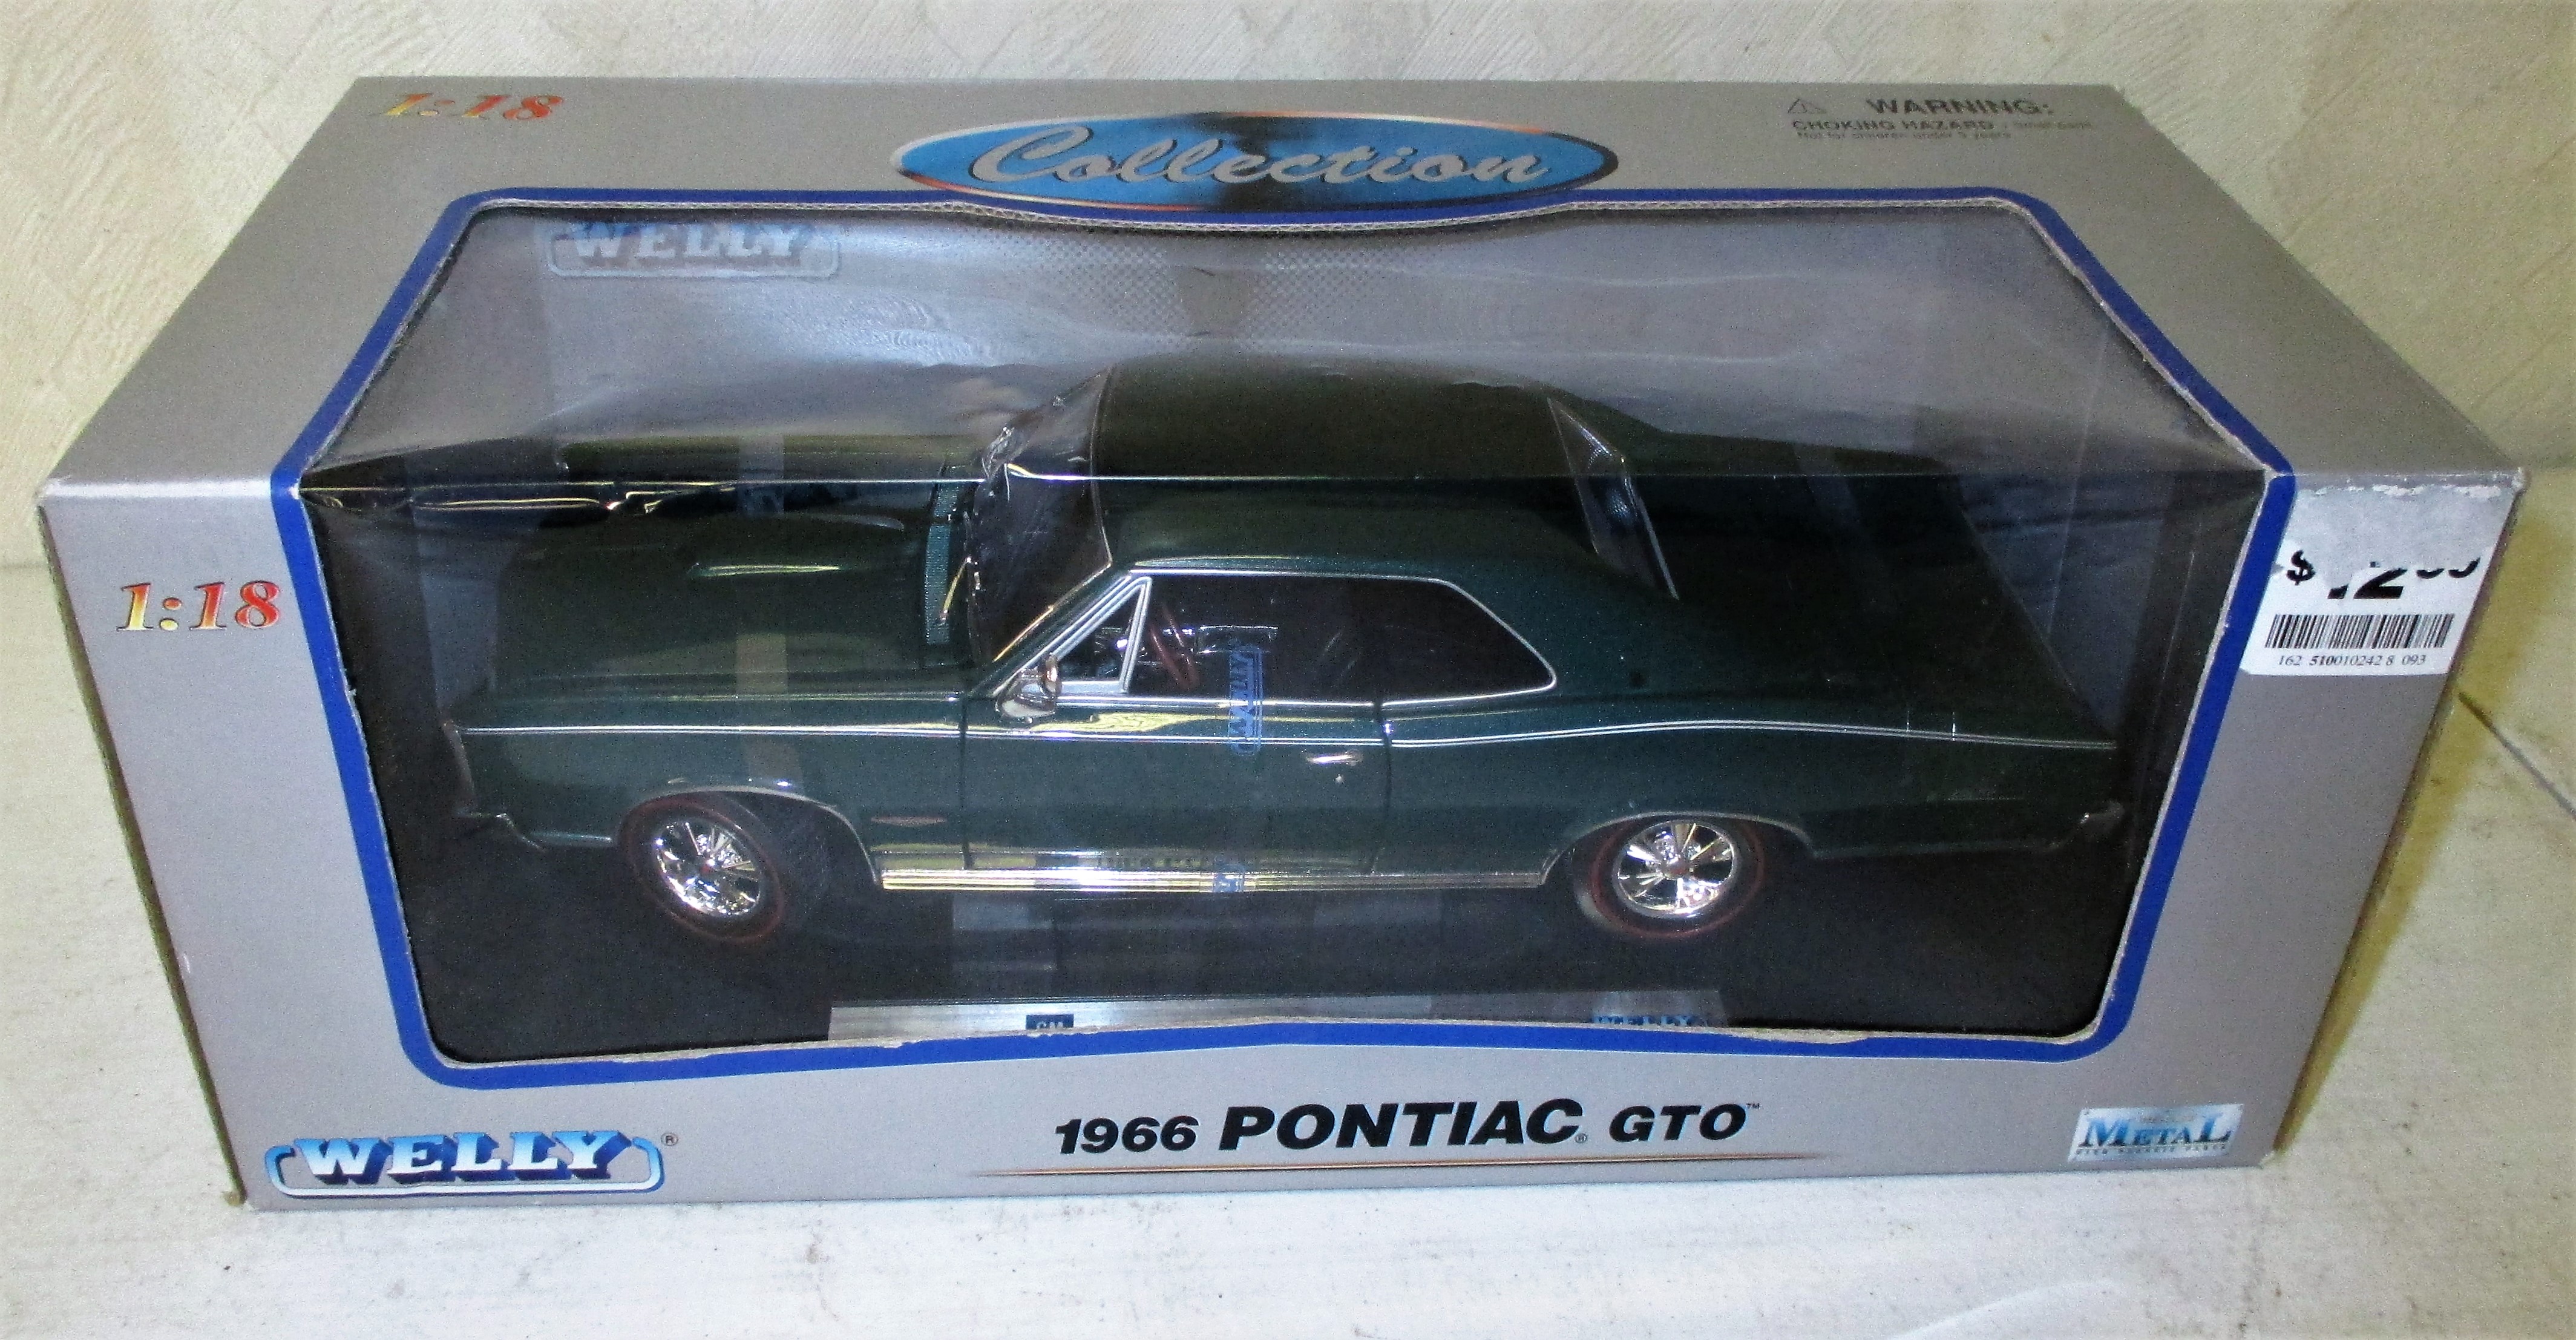 154: 1966 Pontiac GTO Diecast Model